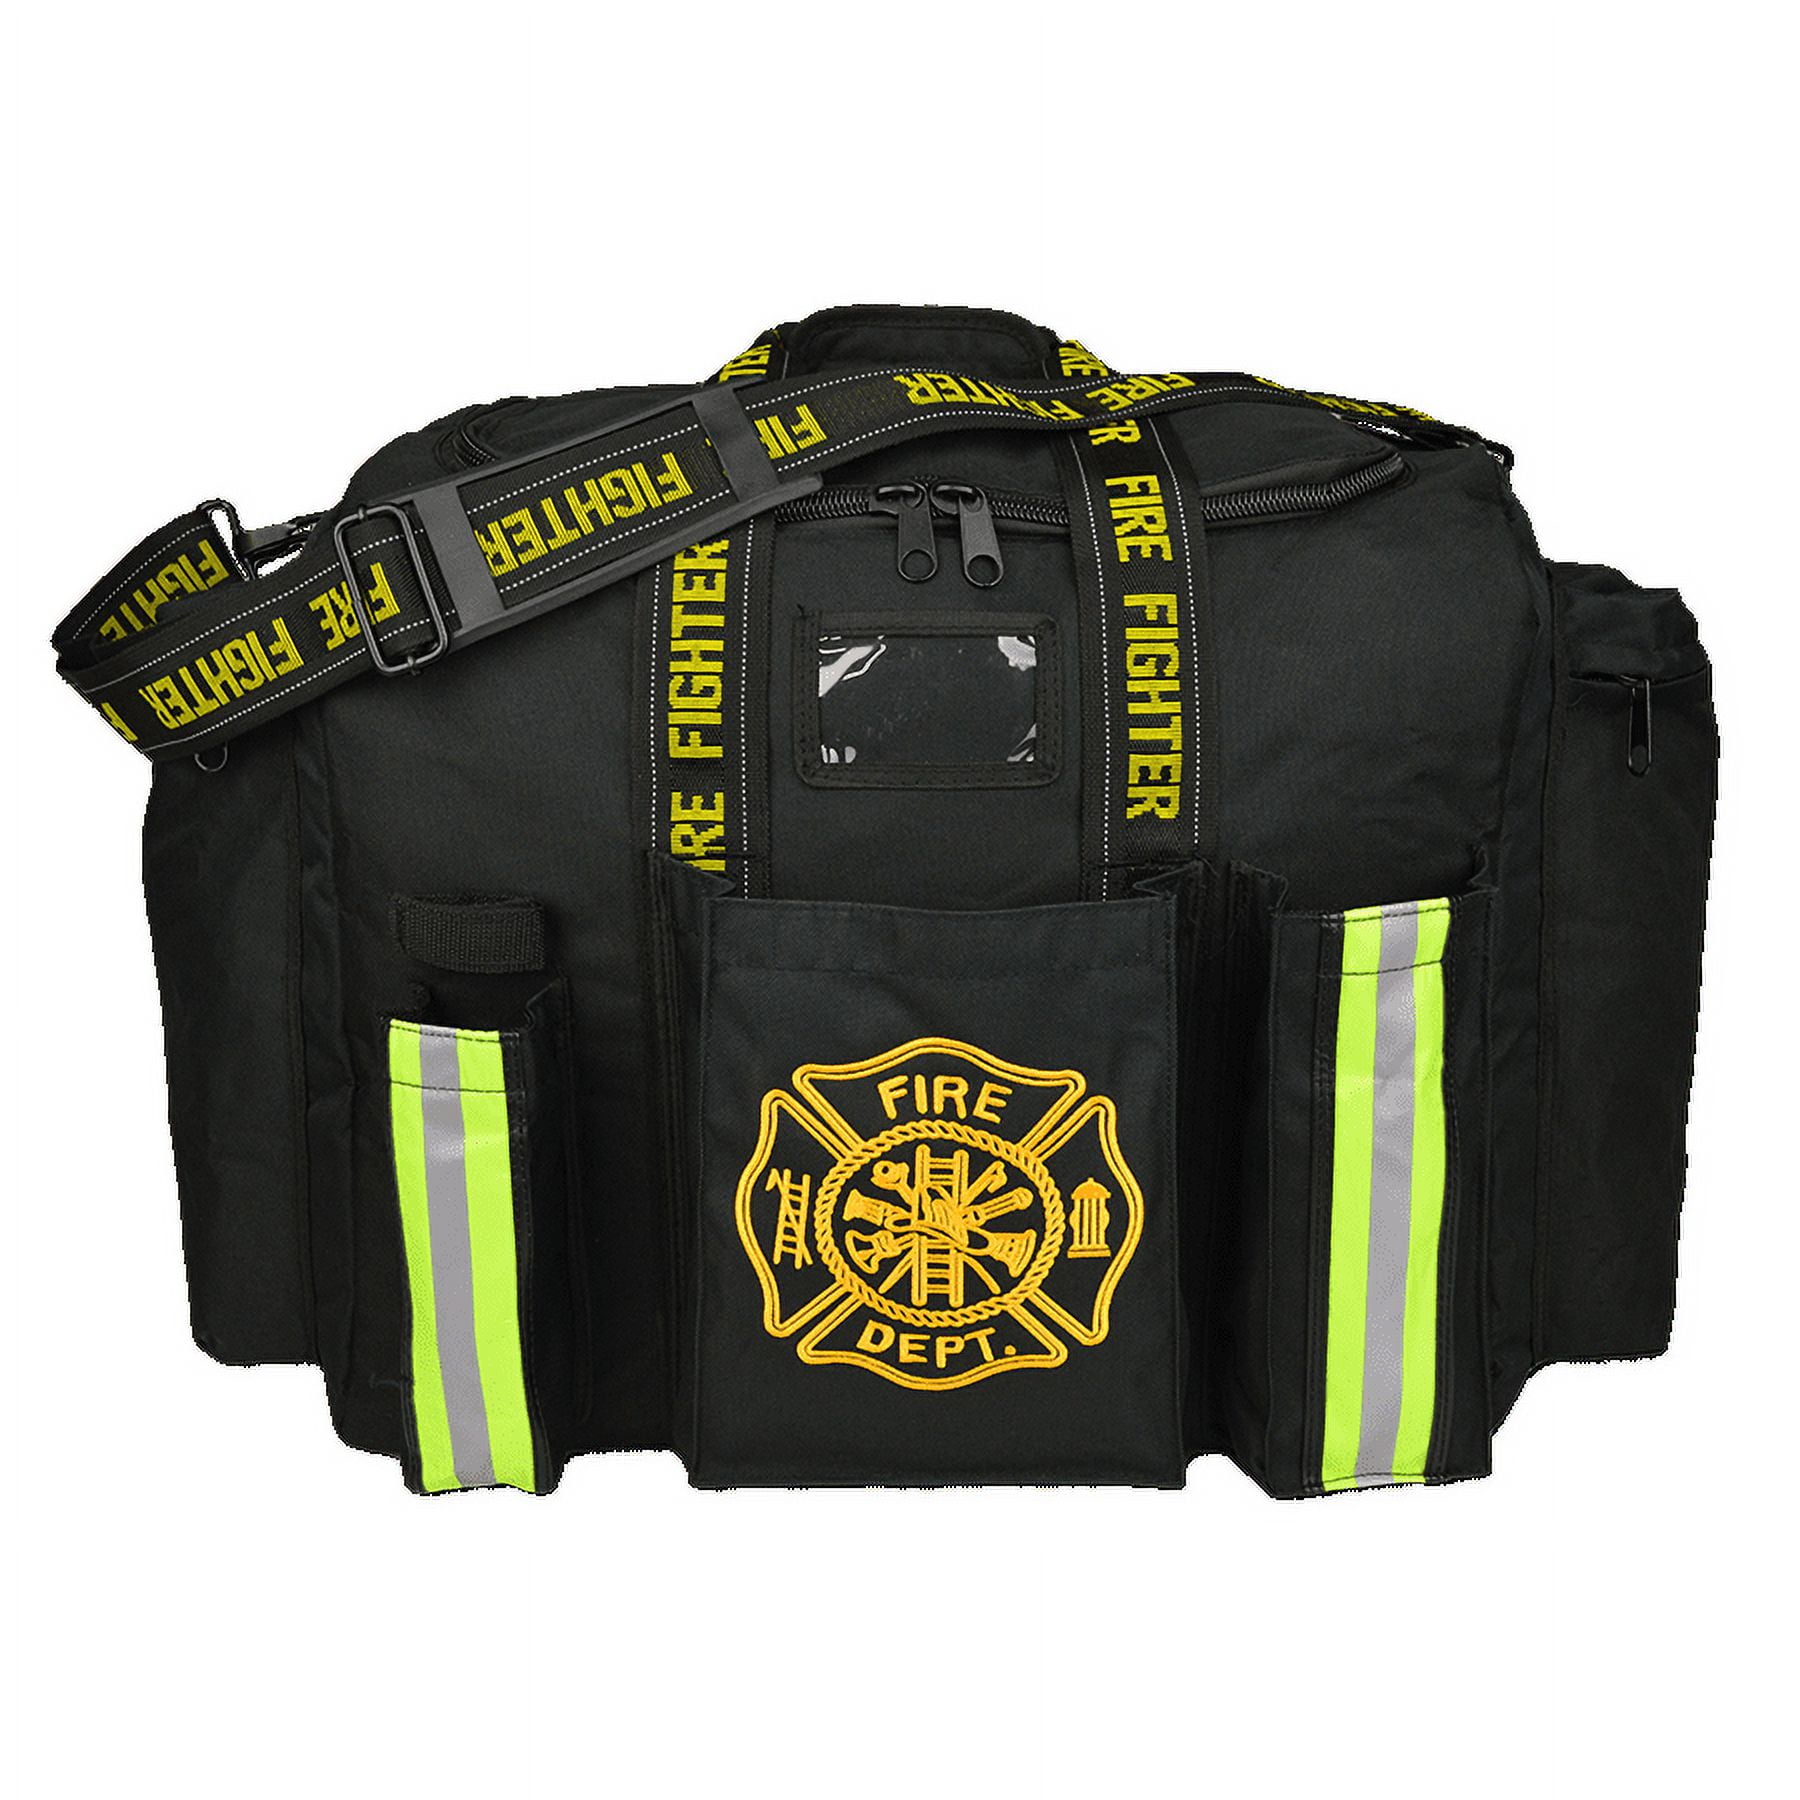 Large Firefighter Gear Bag - North Ridge Fire Equipment